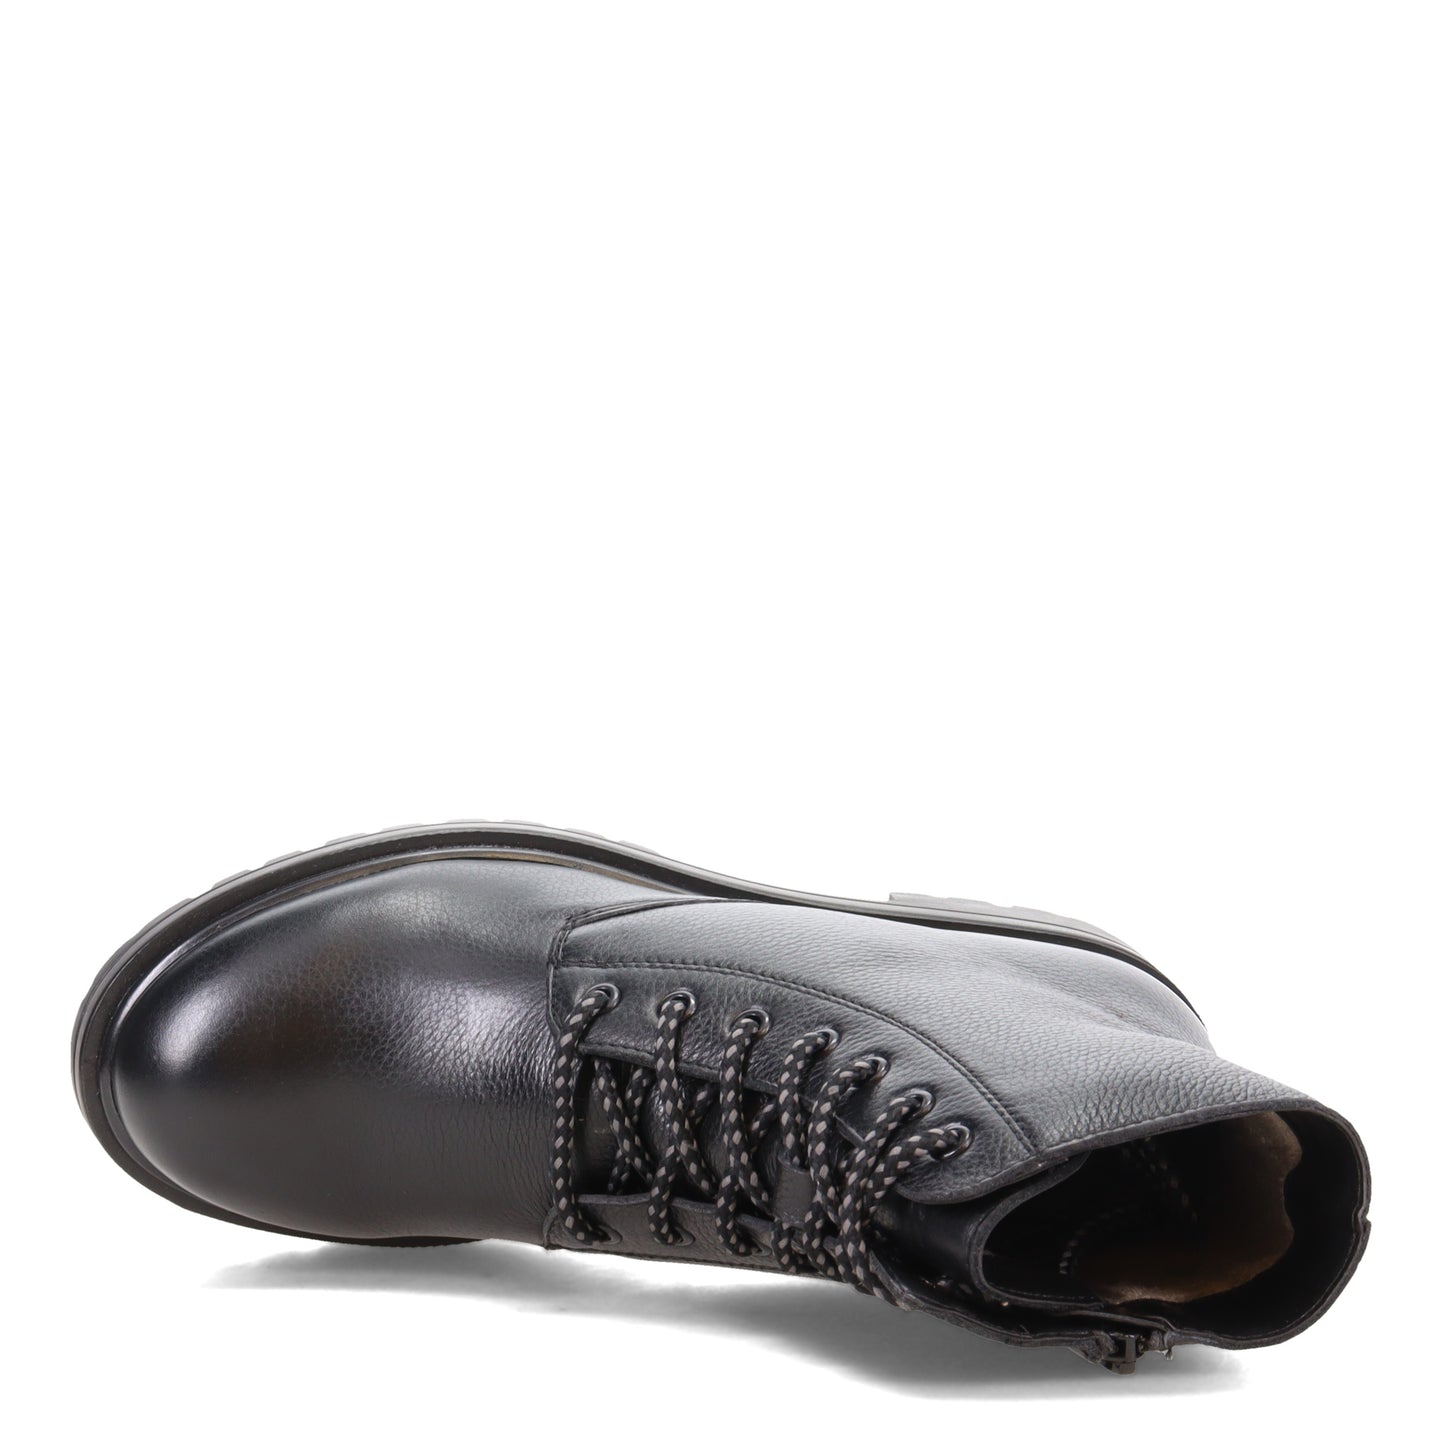 Peltz Shoes  Women's Skechers Winter - Teen Rider Boot Black 167557-BBK